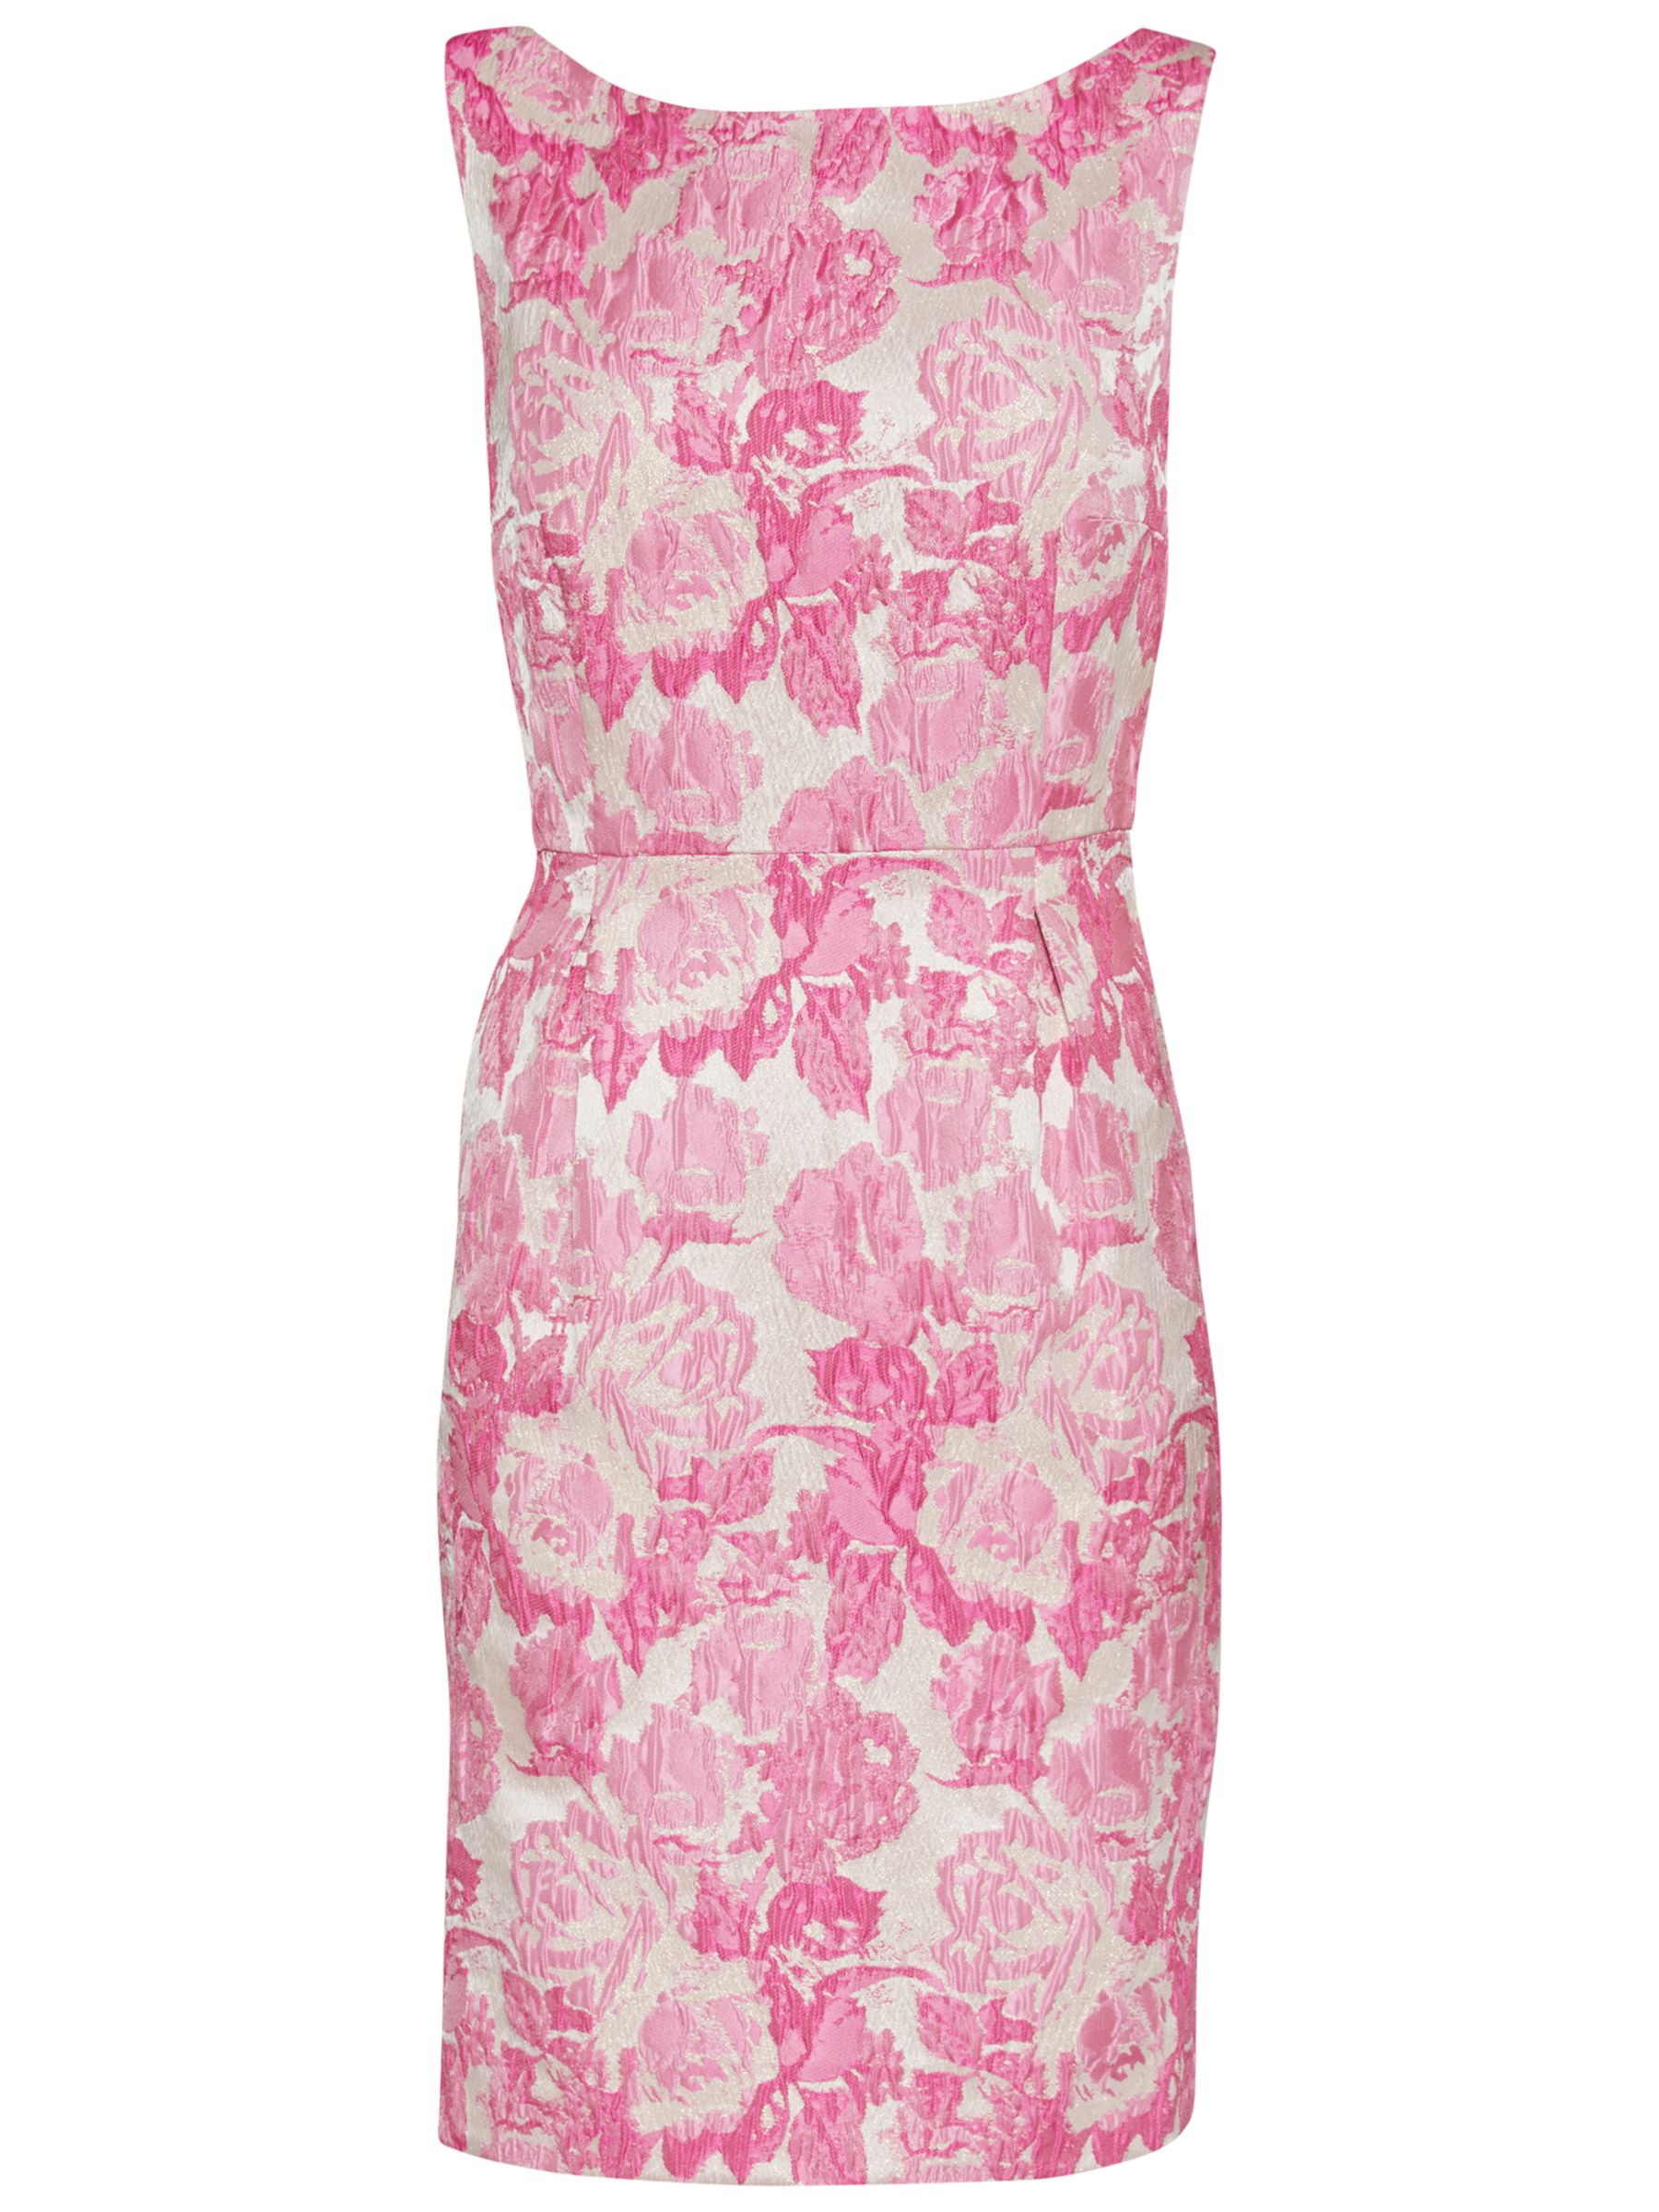 Gina Bacconi Tonal Matelasse Floral Jacquard Dress, Pink Brocade